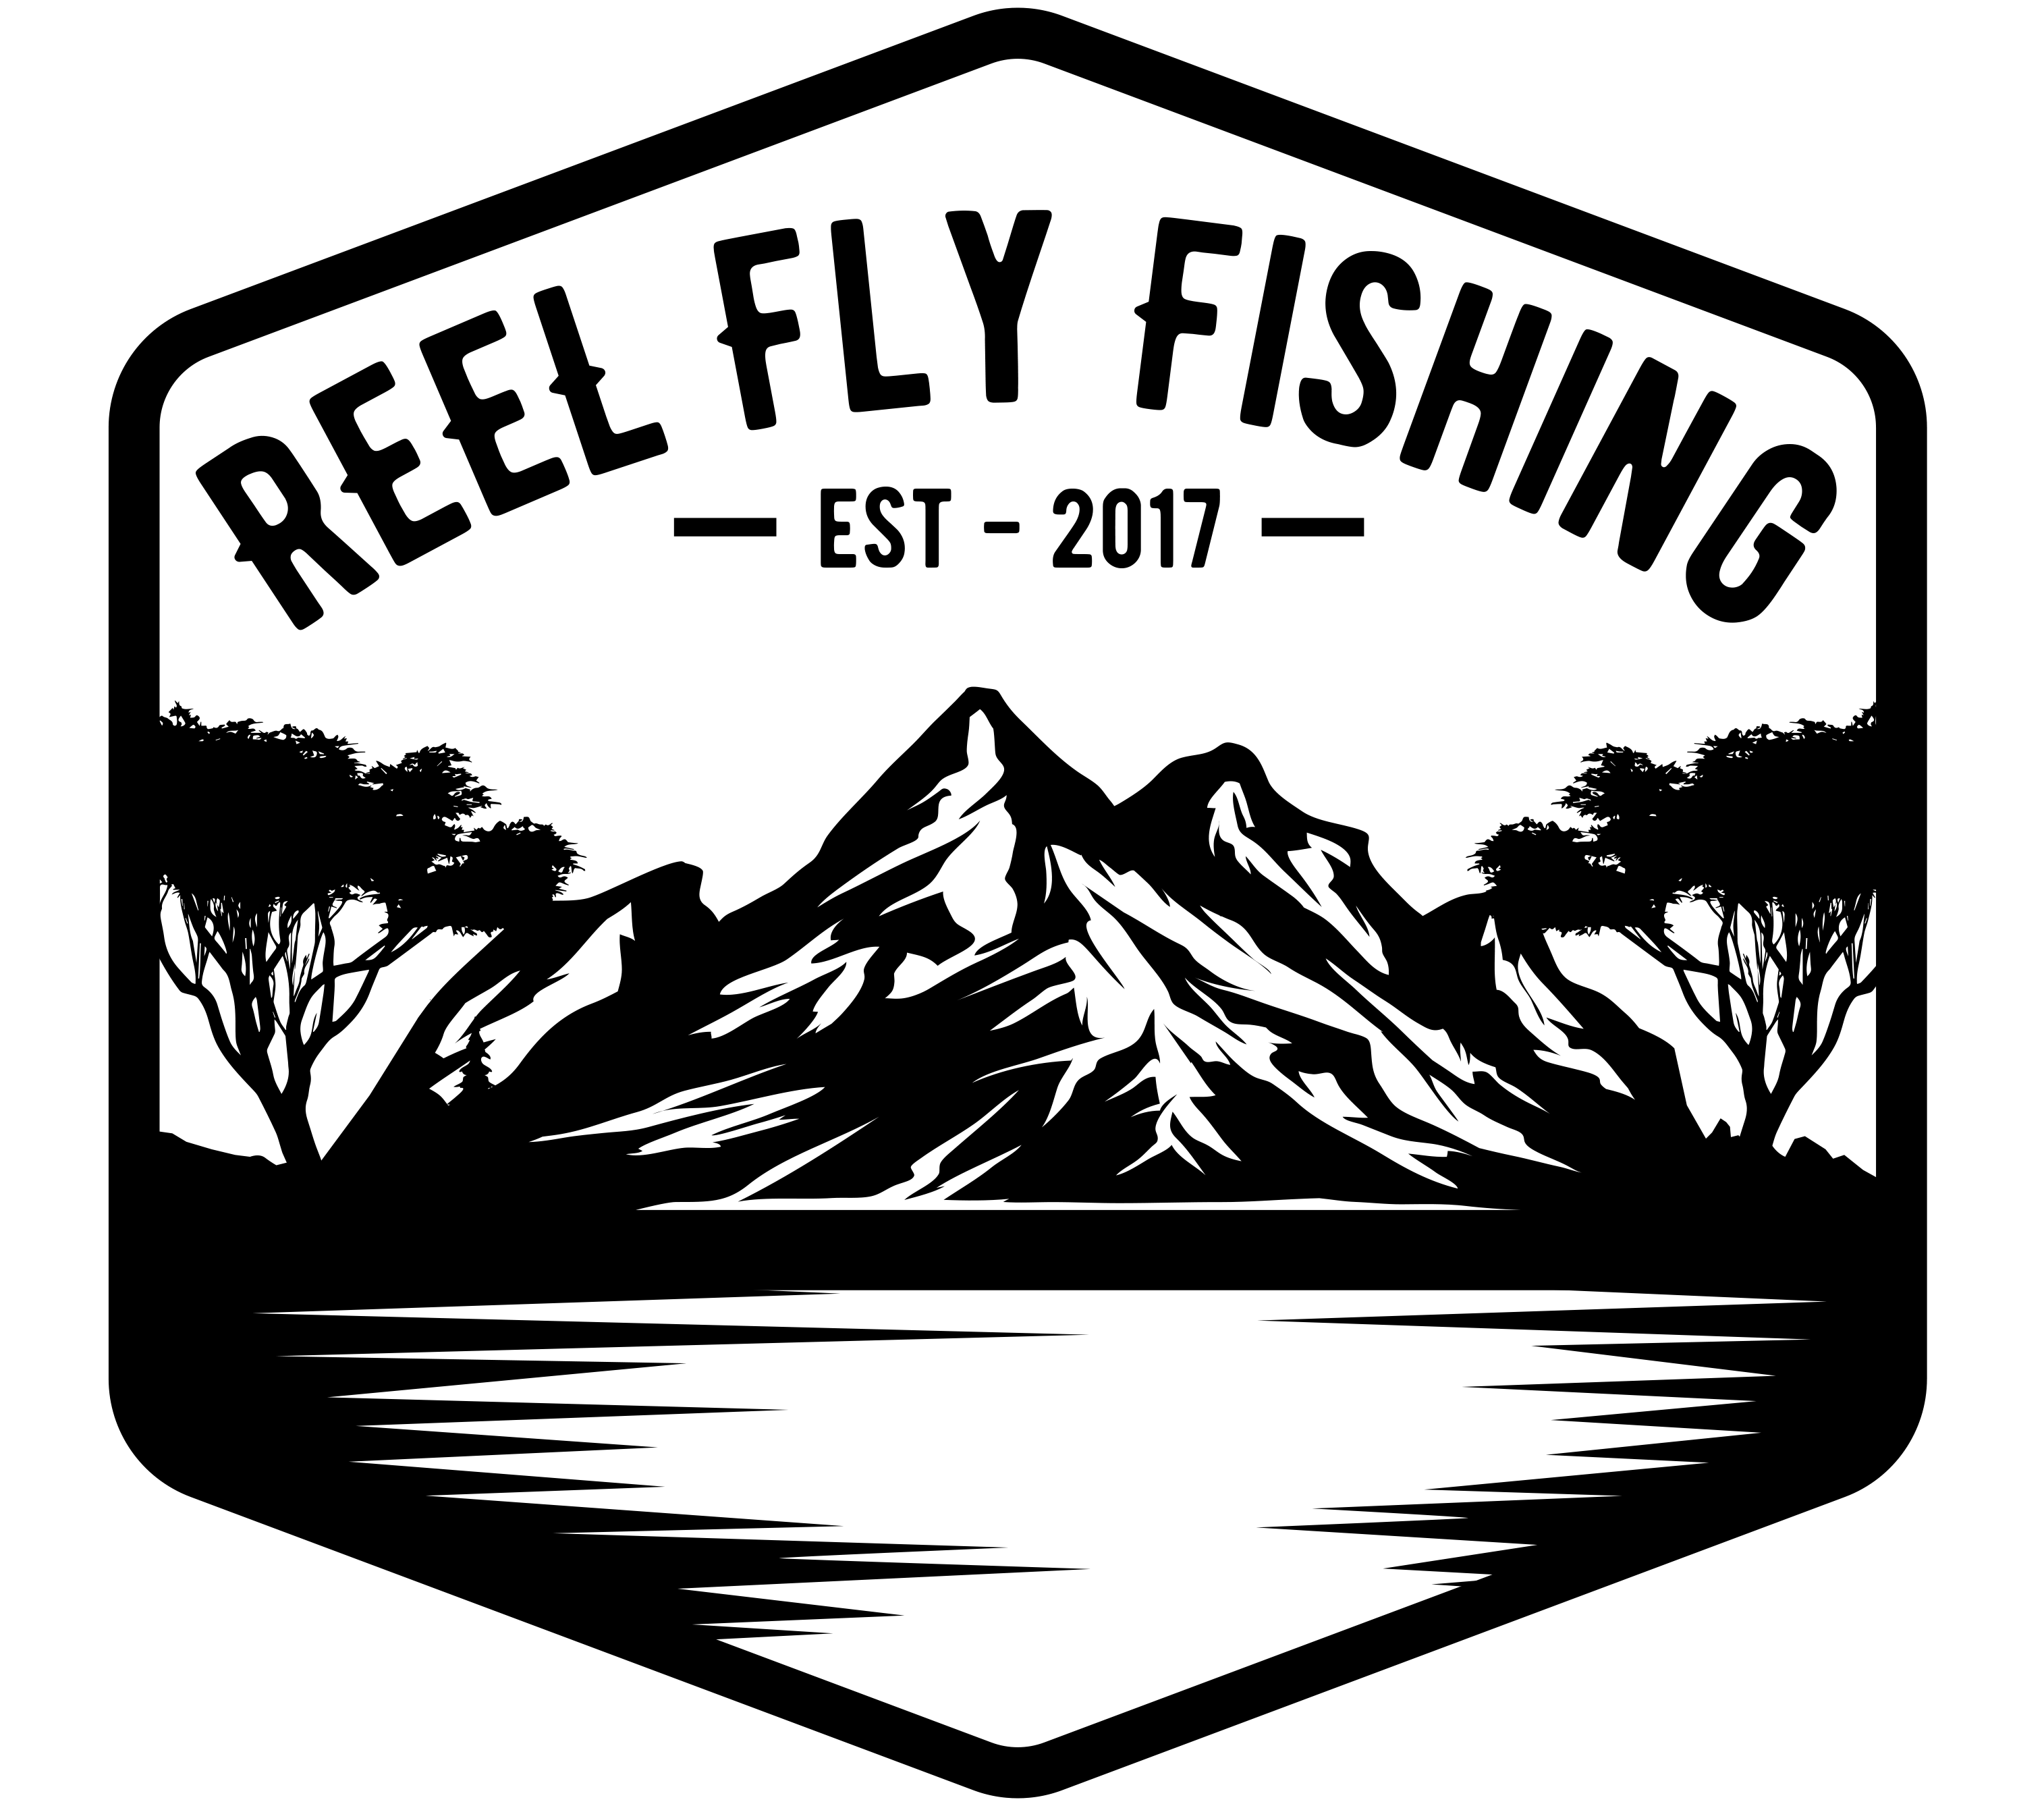 REEL Fly Fishing